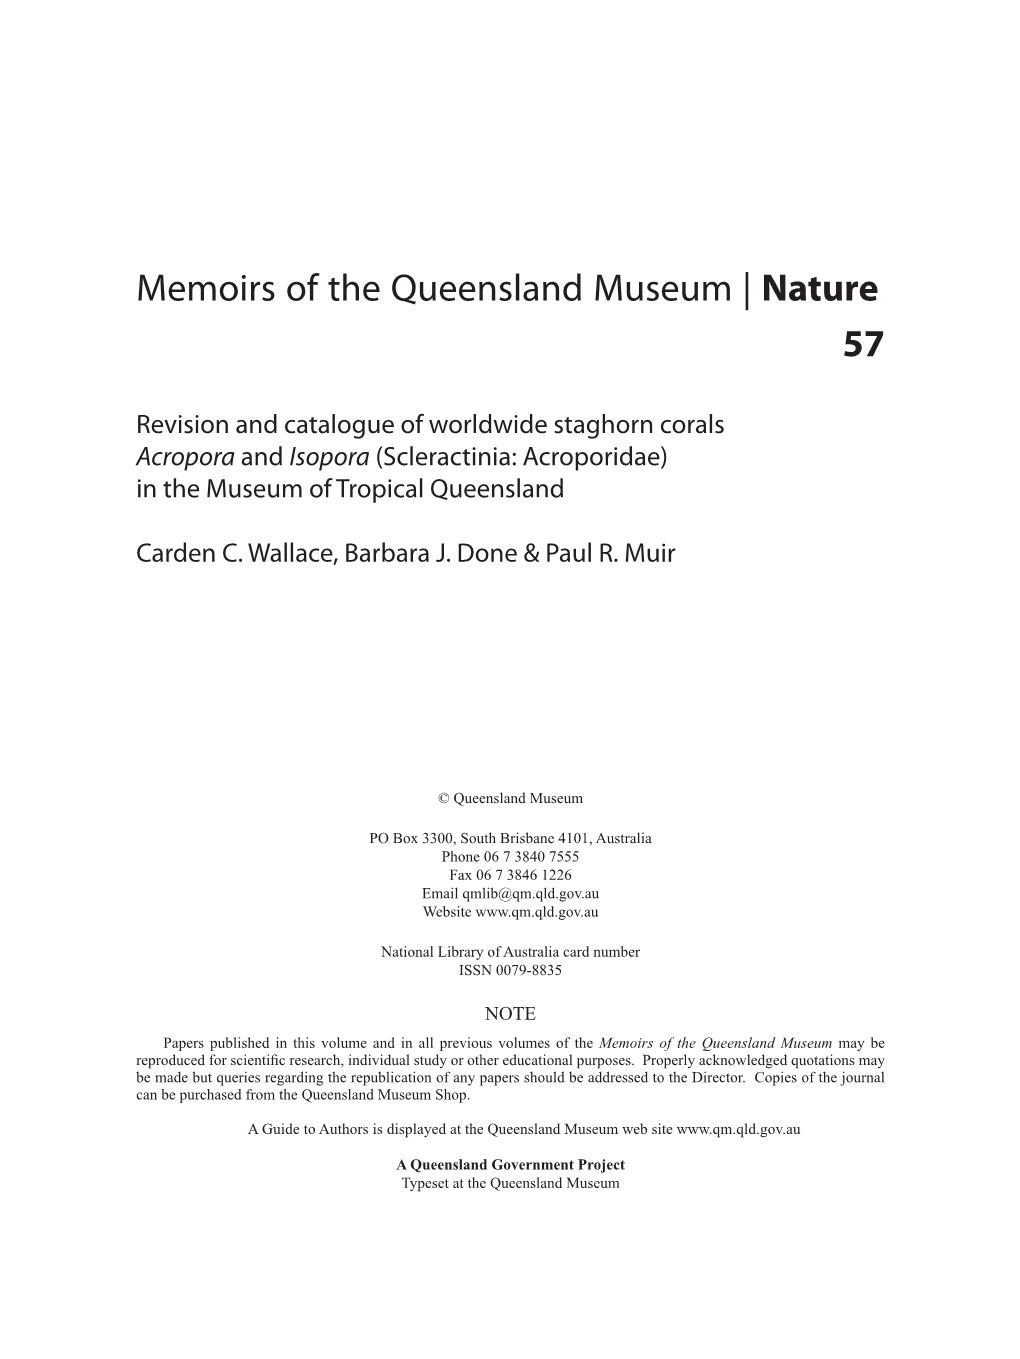 Memoirs of the Queensland Museum | Nature 57